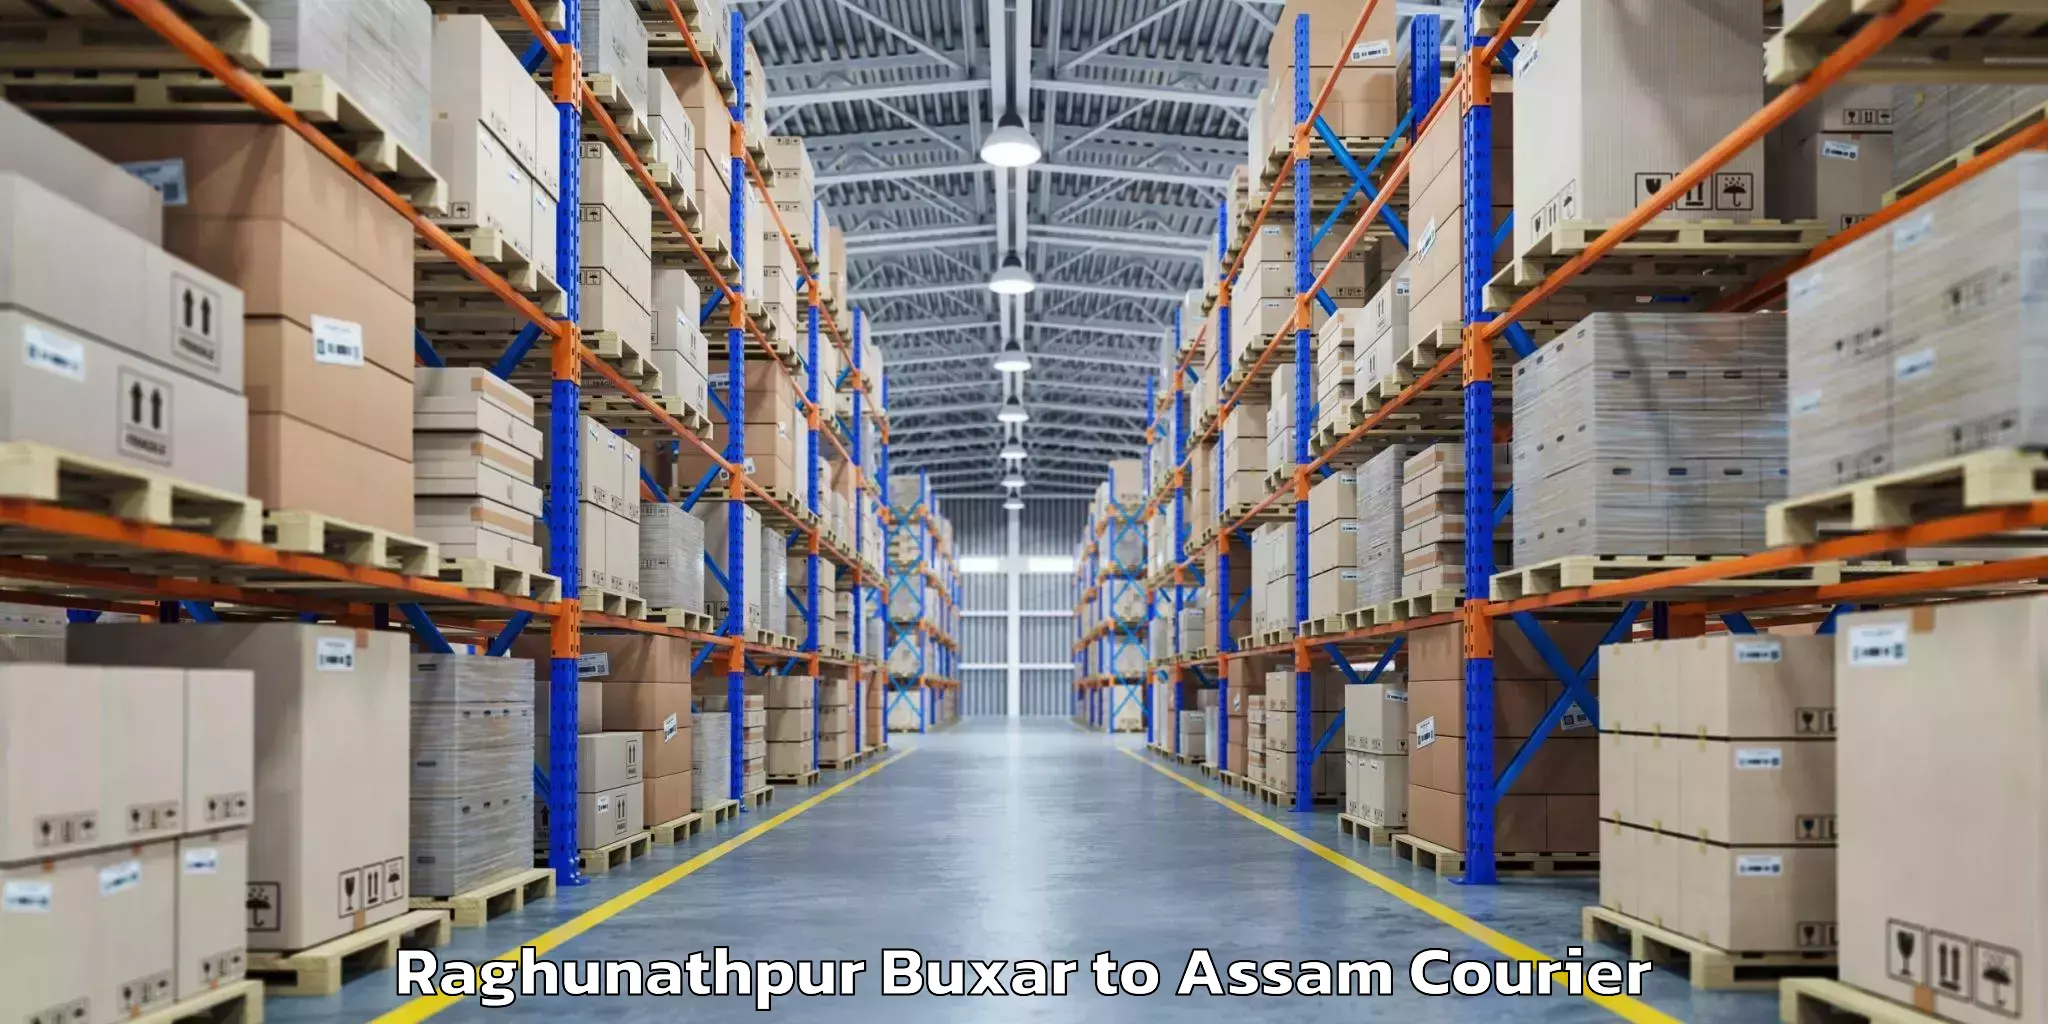 Urgent luggage shipment Raghunathpur Buxar to Lala Assam